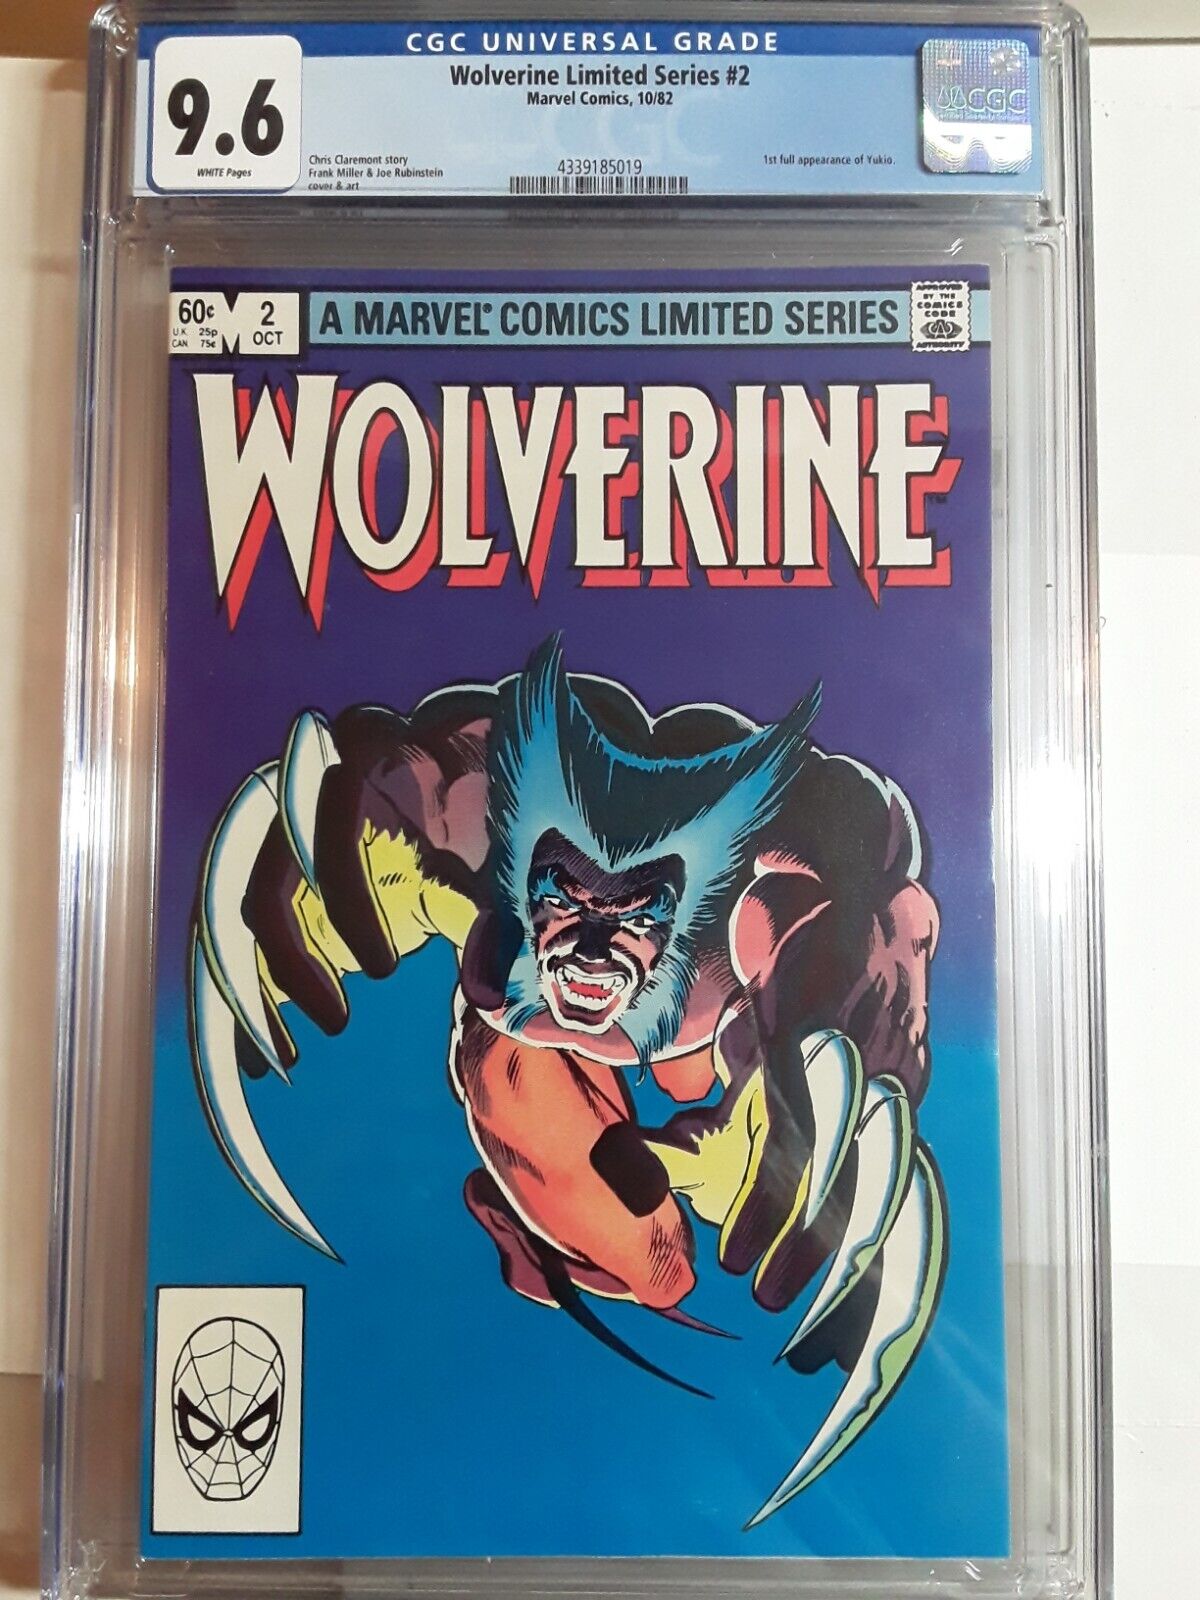 Wolverine Limited Series #2 CGC 9.6 FRANK MILLER  CVR & ART  1982 1st Full Yukio